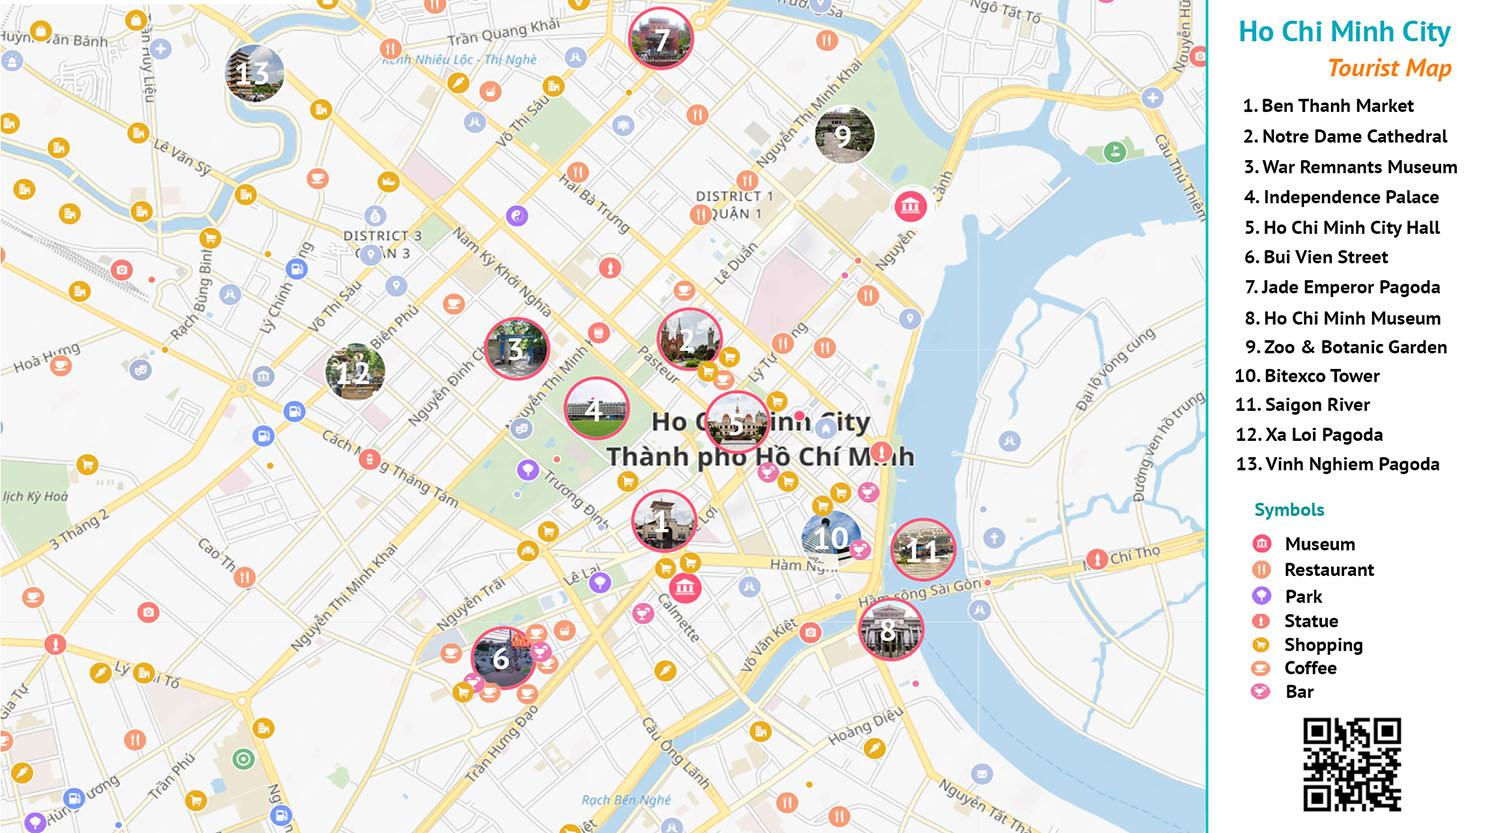 Ho Chi Minh City Tourist Map - Vietnamnomad